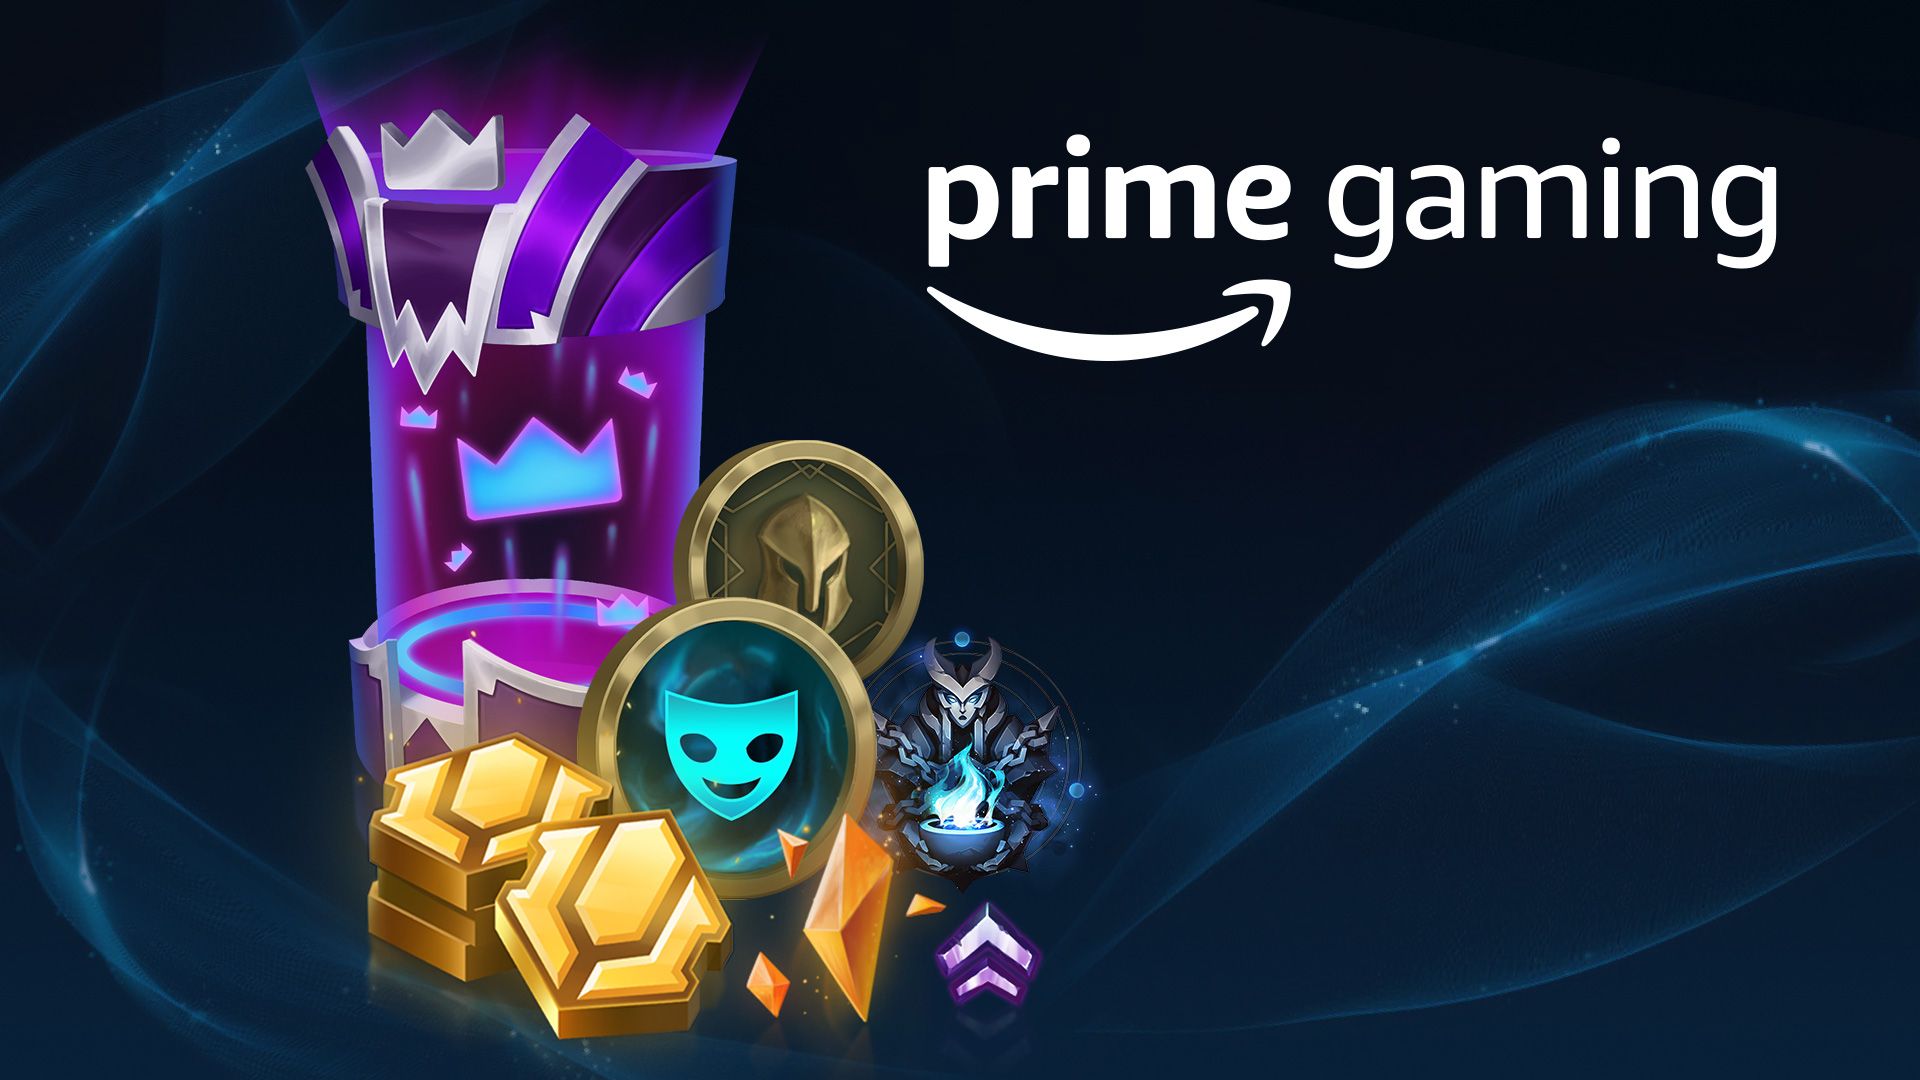 Prime Gaming loot – free in-game goodies